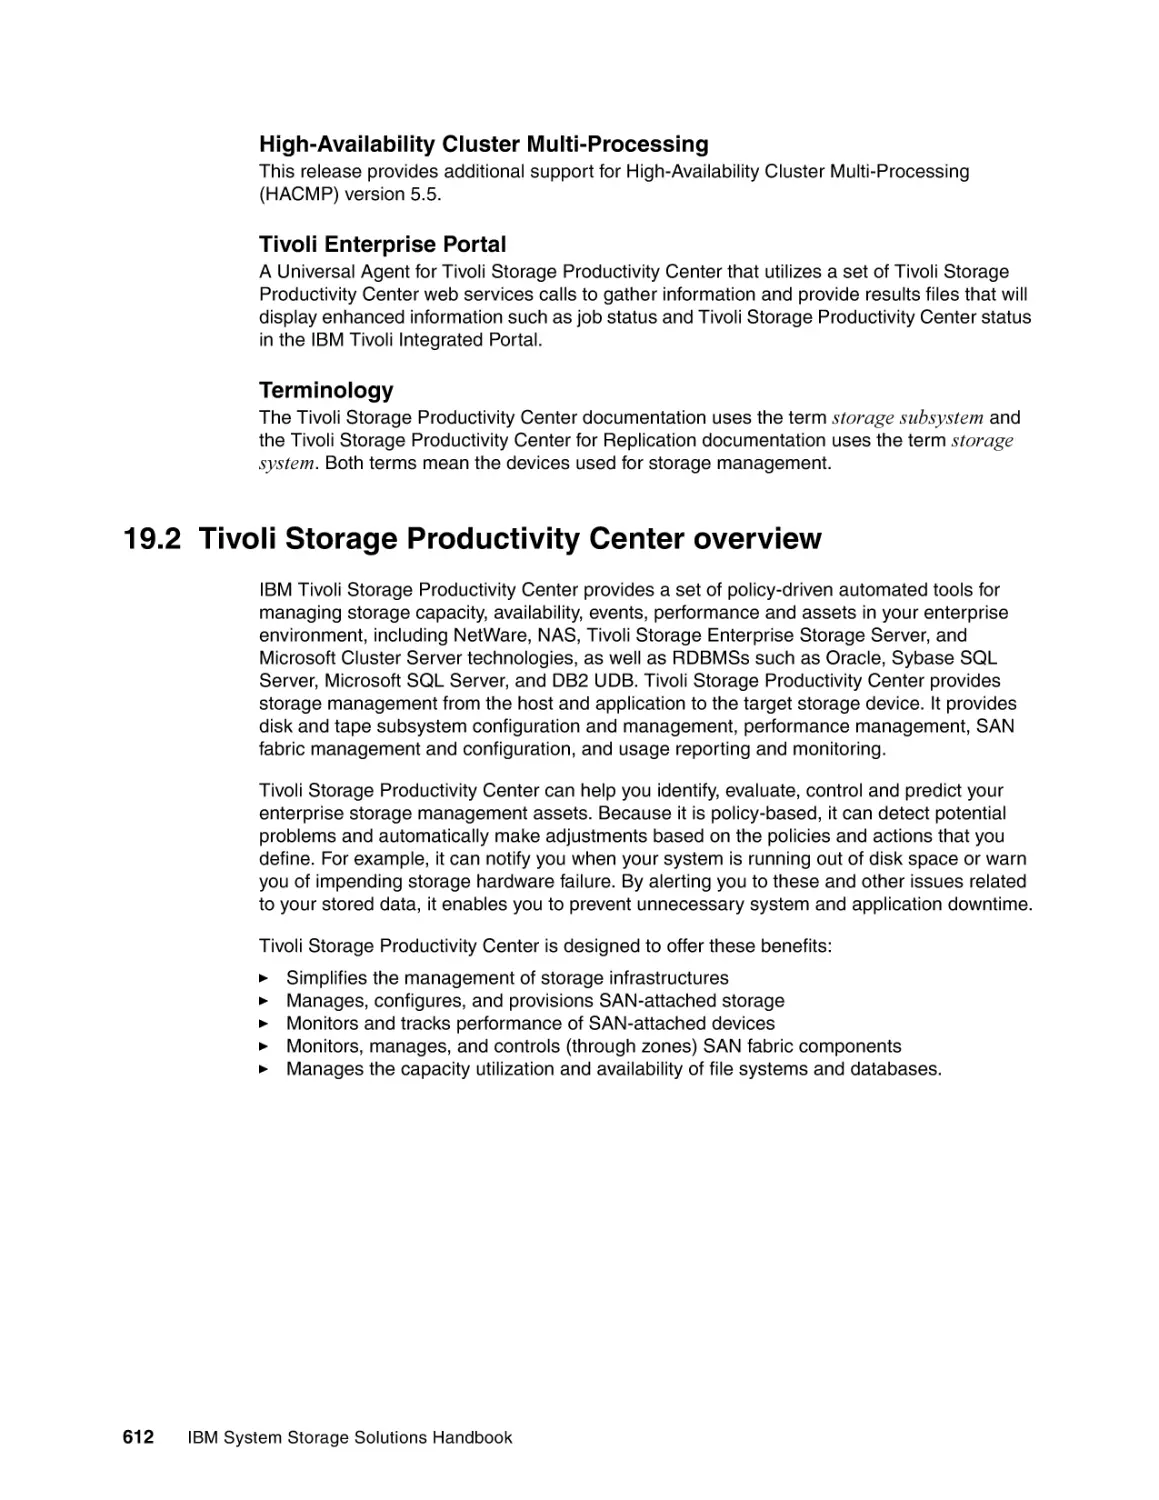 19.2 Tivoli Storage Productivity Center overview